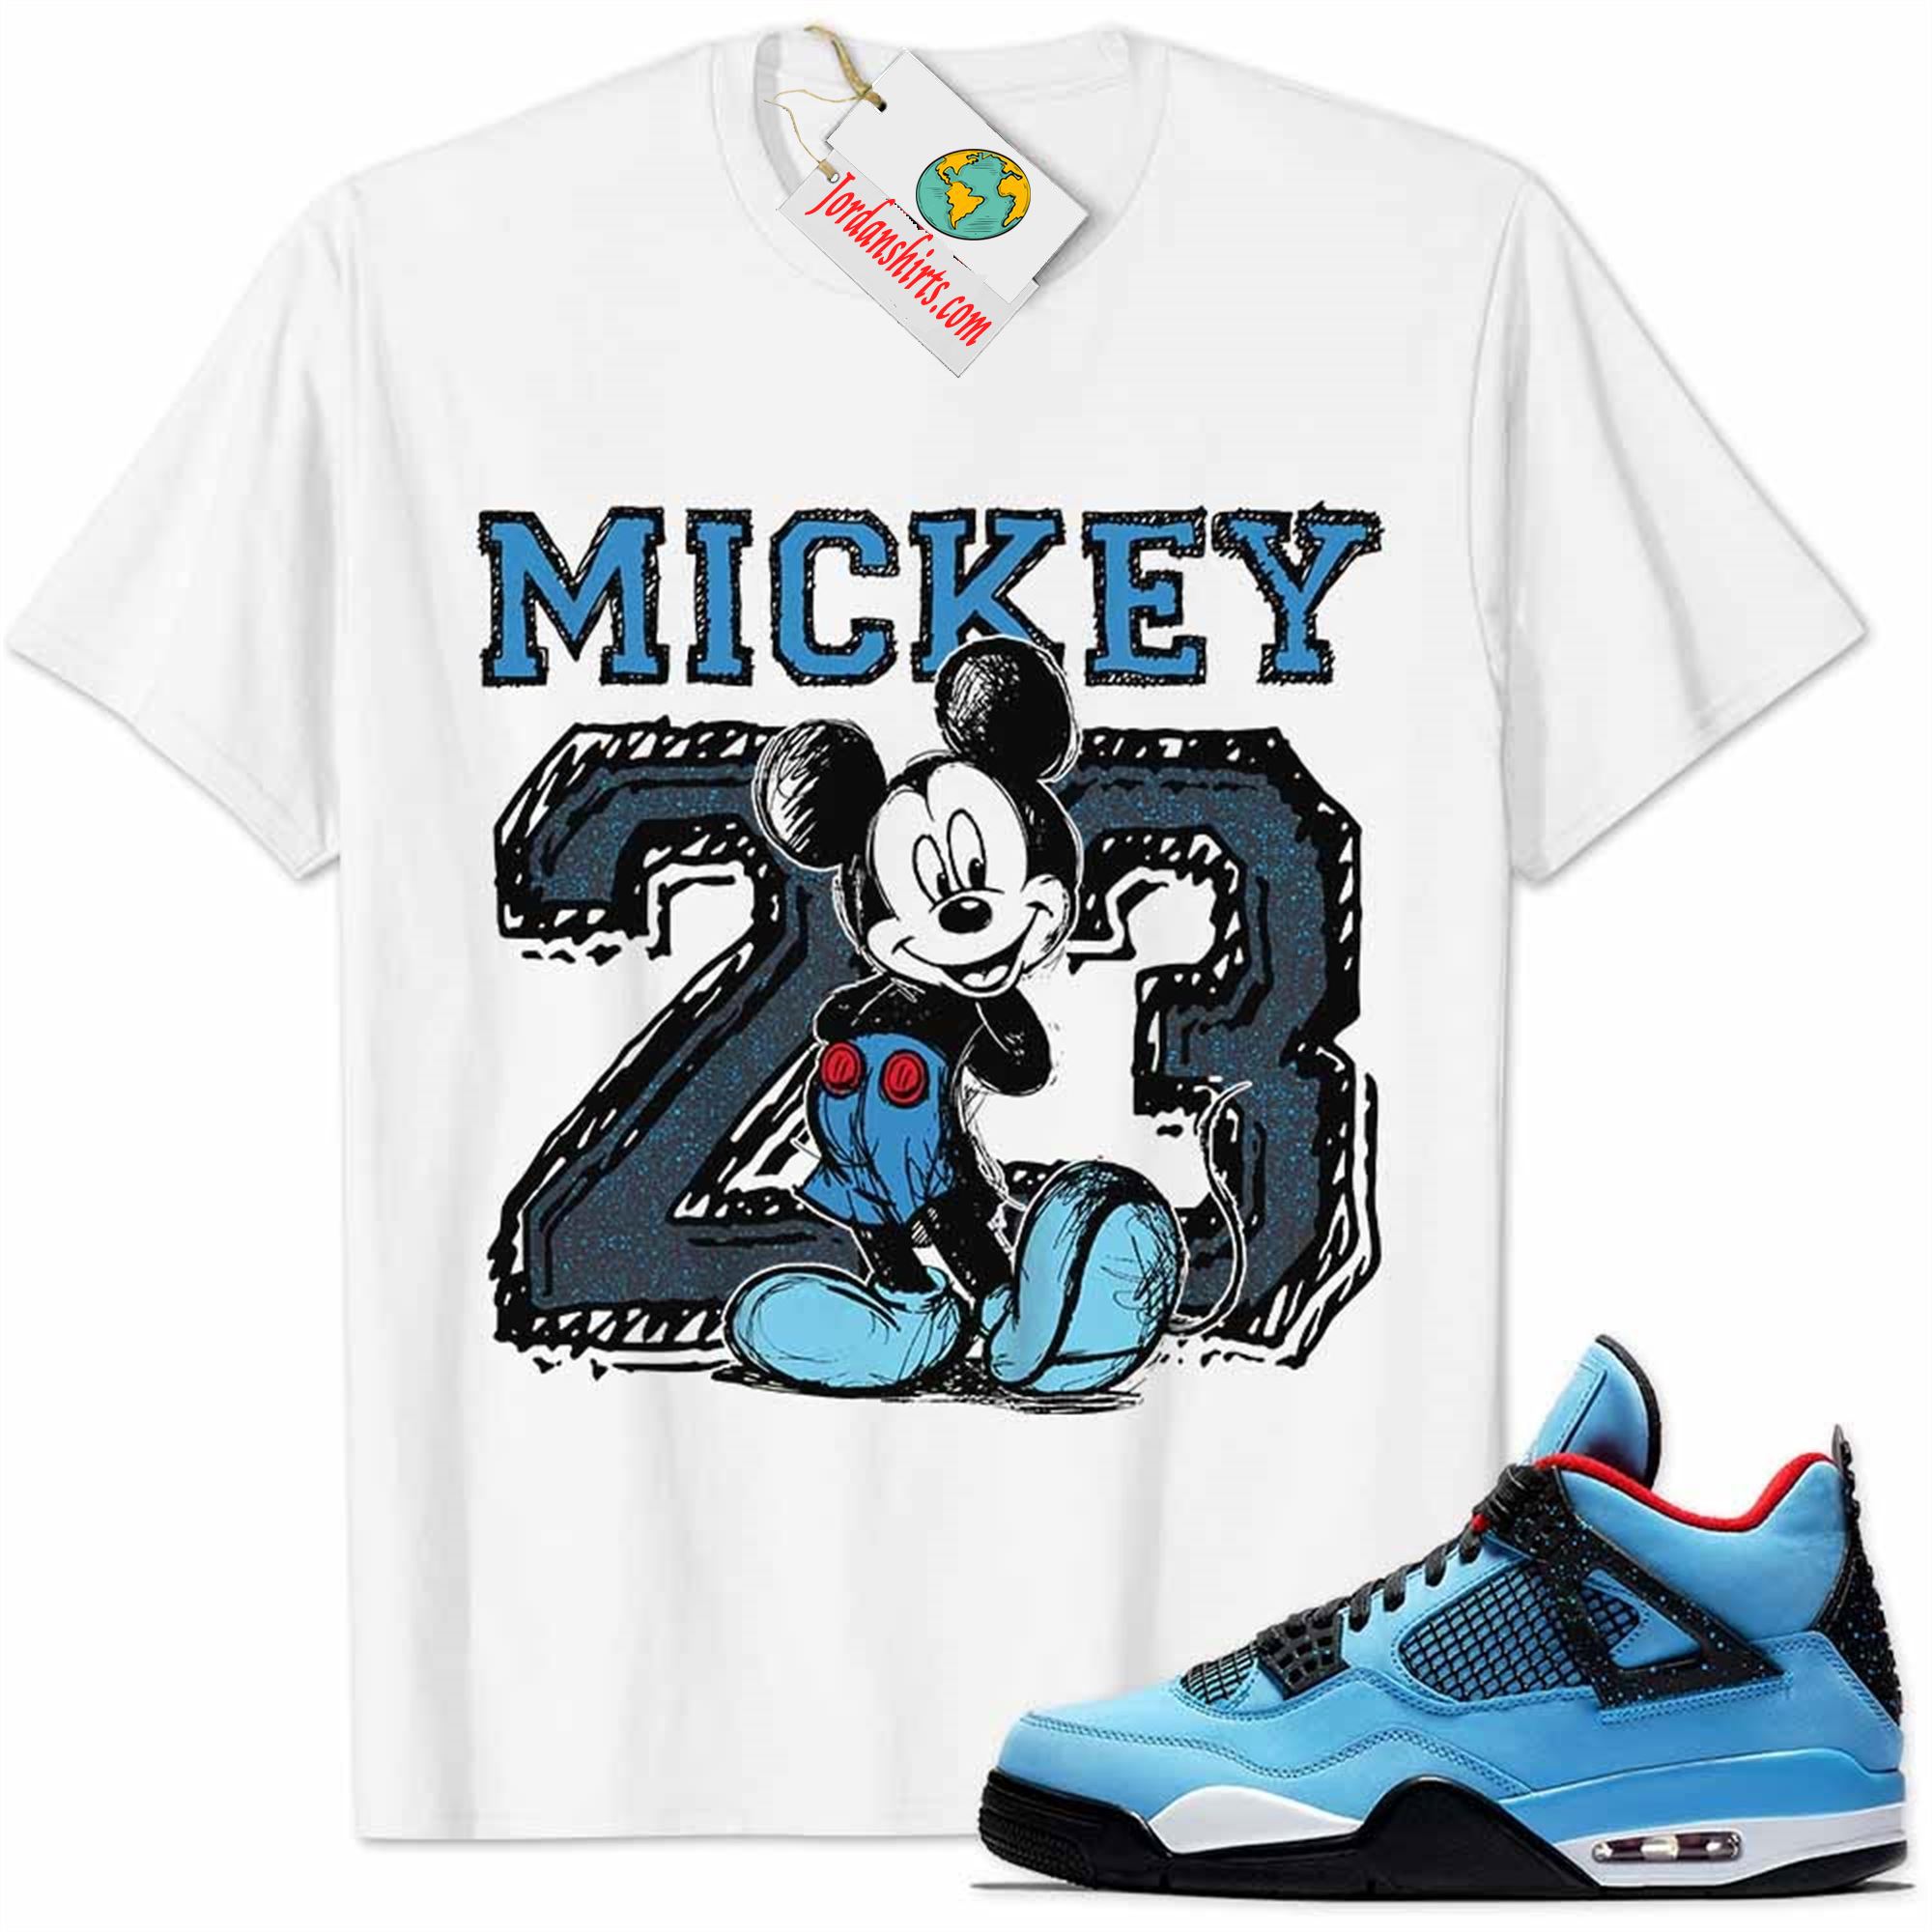 Jordan 4 Shirt, Cactus Jack Travis Scott 4s Shirt Mickey 23 Michael Jordan Number Draw White Full Size Up To 5xl